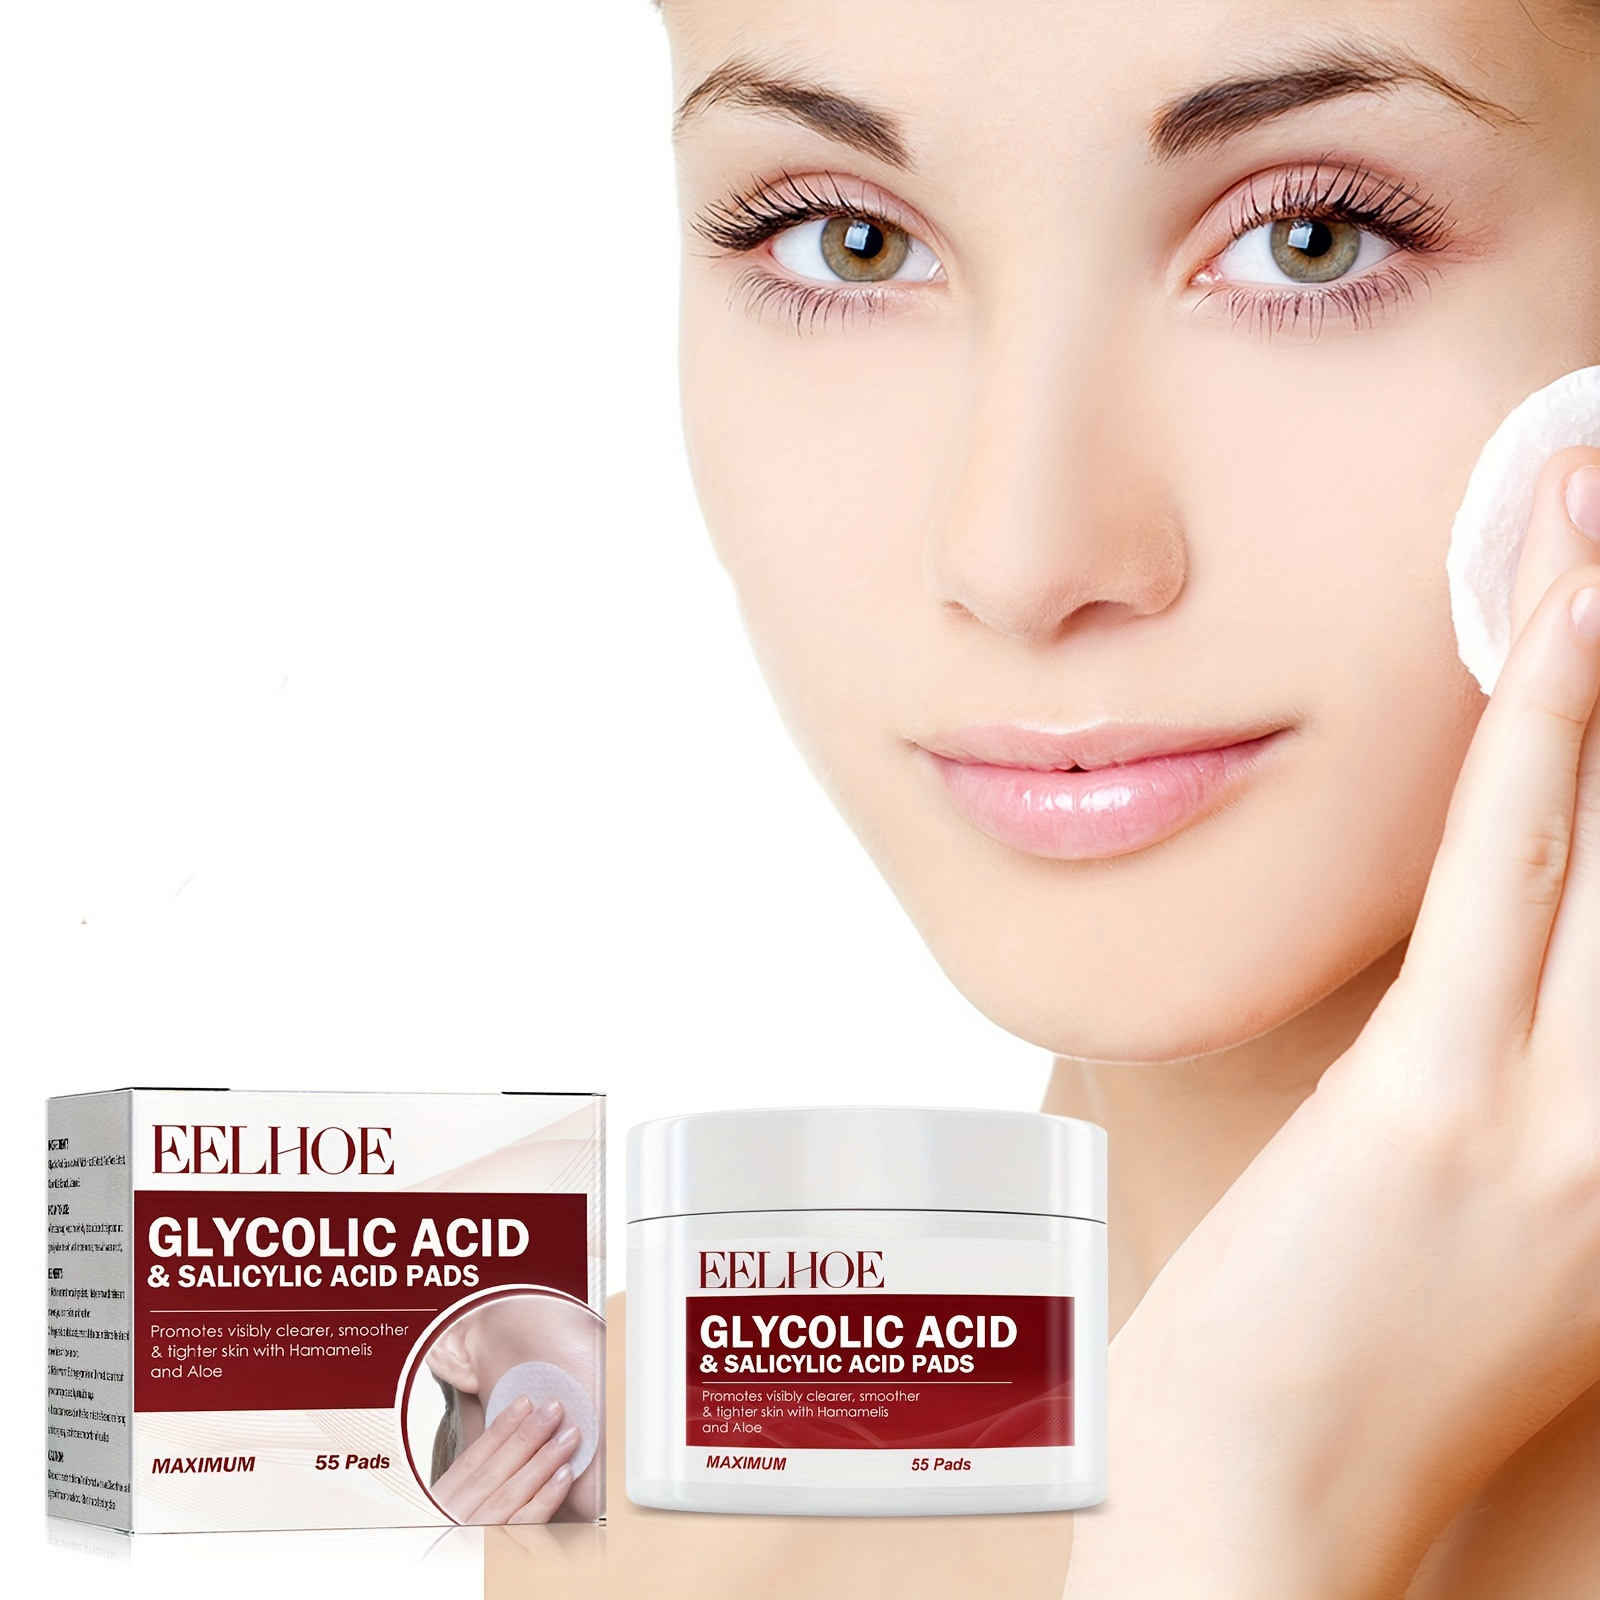 

55 Pads Facial Glycolic Acid Pads & Salicylic Acid Pads, Moisturizing, Refining Pores Firming Smoothing Skin Rejuvenation Pads